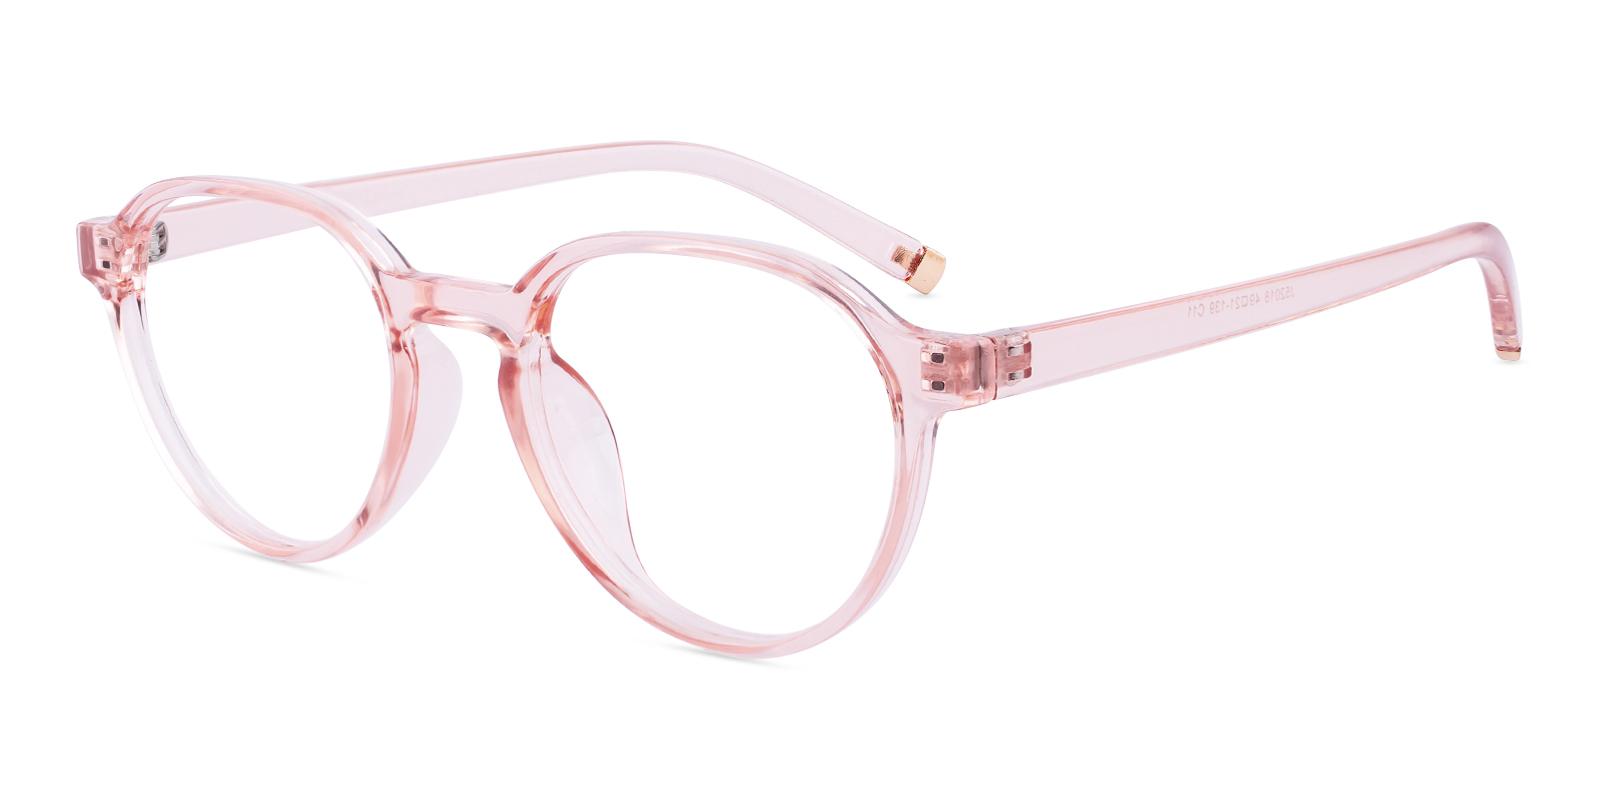 Hedrsive Pink Plastic Eyeglasses , UniversalBridgeFit Frames from ABBE Glasses